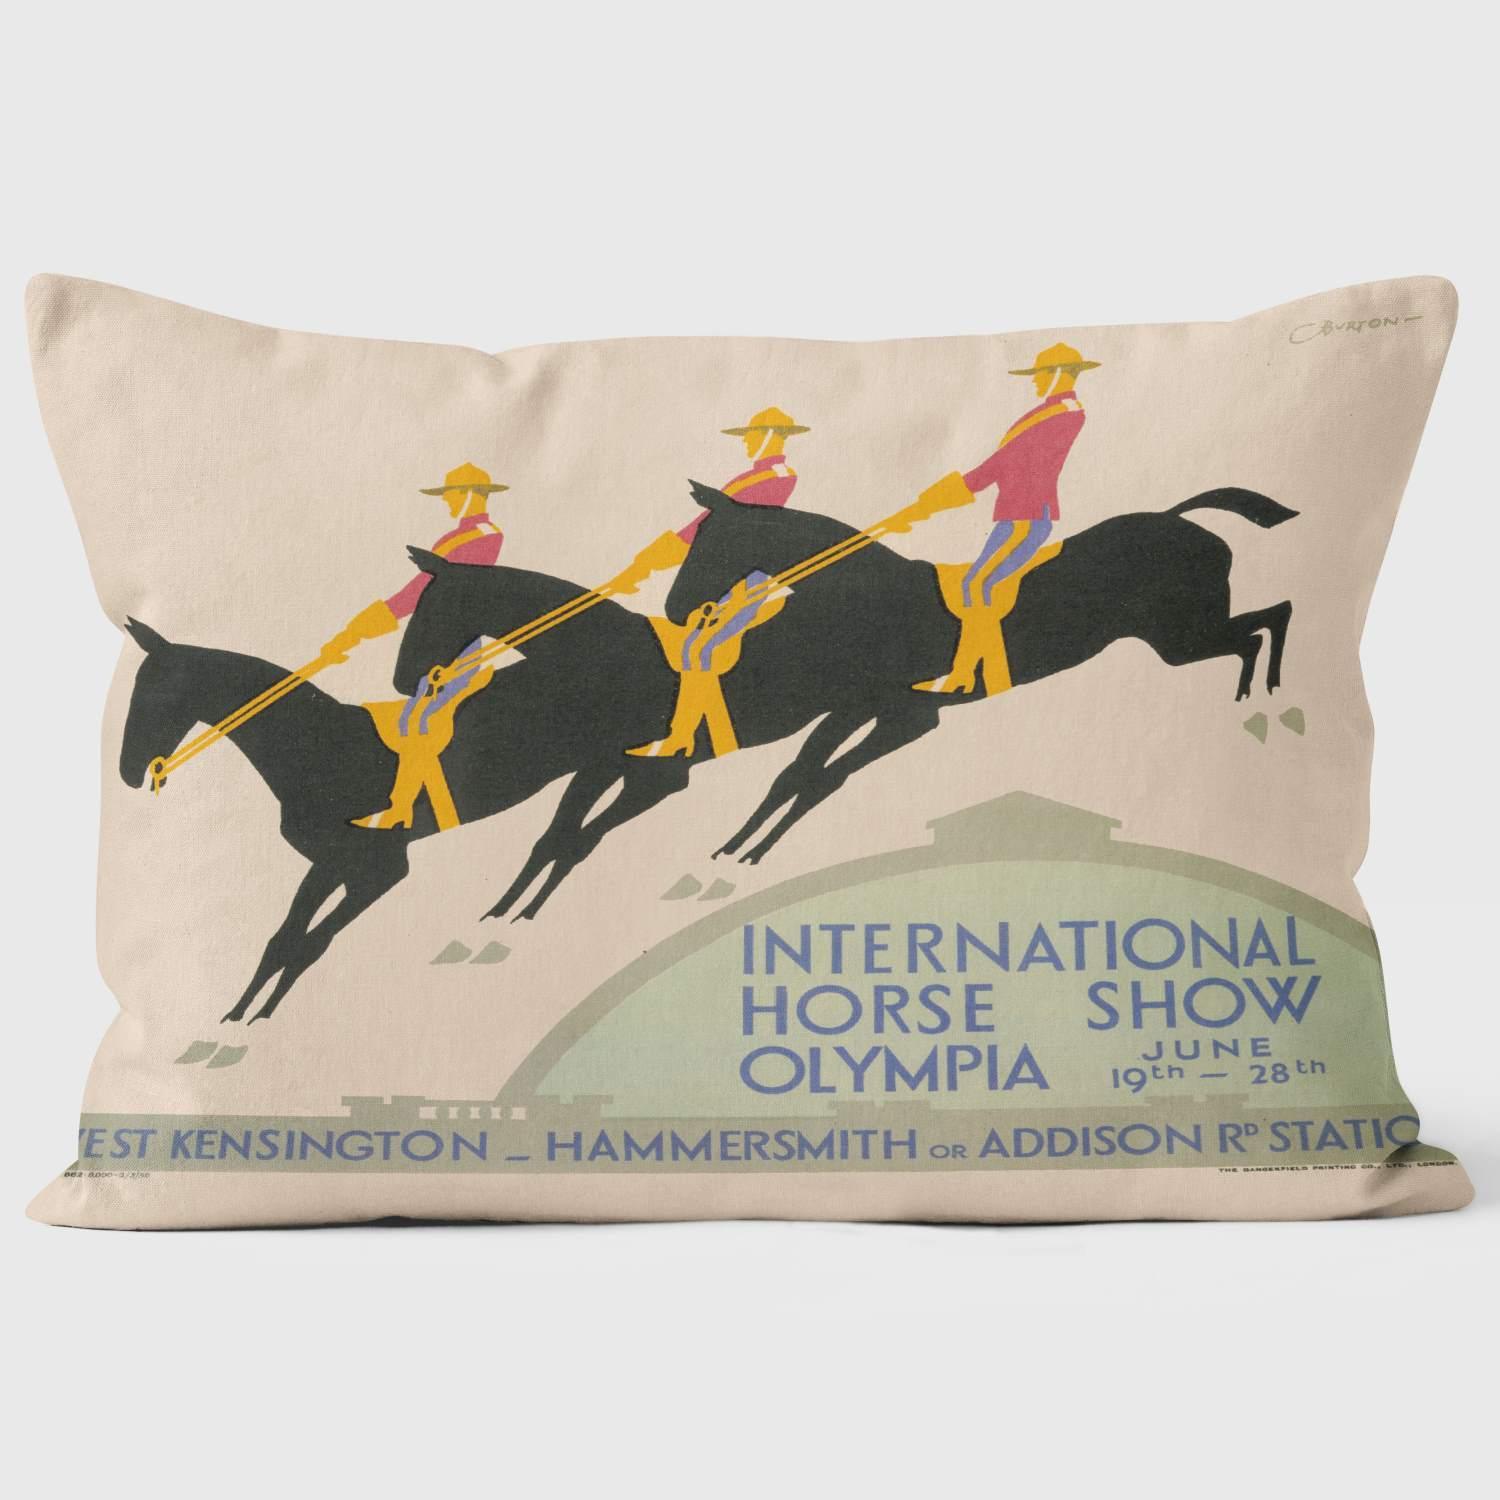 International Horse Show Olympia - London Transport Cushion - Handmade Cushions UK - WeLoveCushions